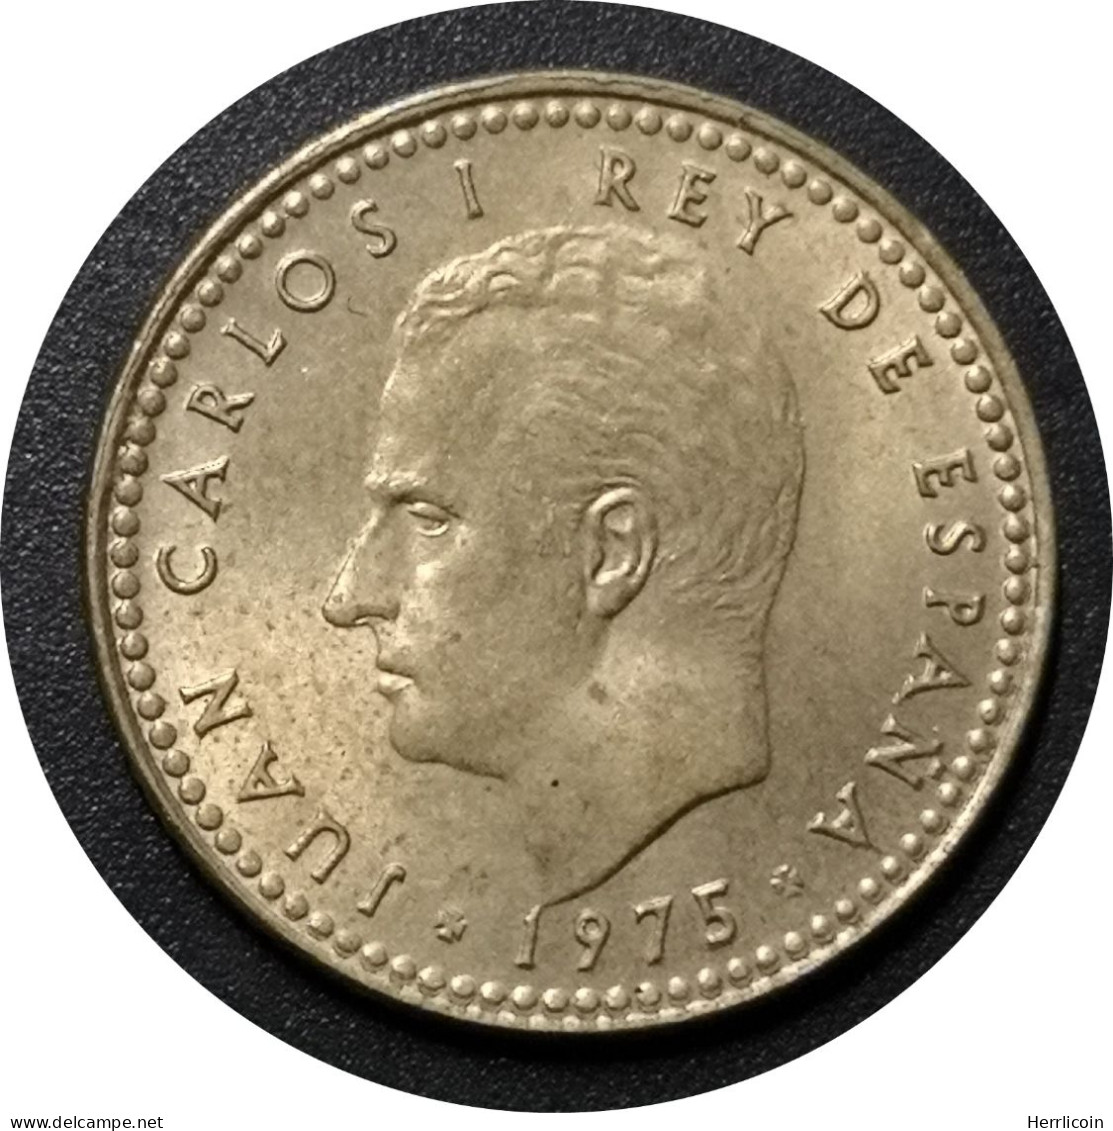 Monnaie Espagne - 1975 (1980) - 1 Peseta Juan Carlos I - 1 Peseta